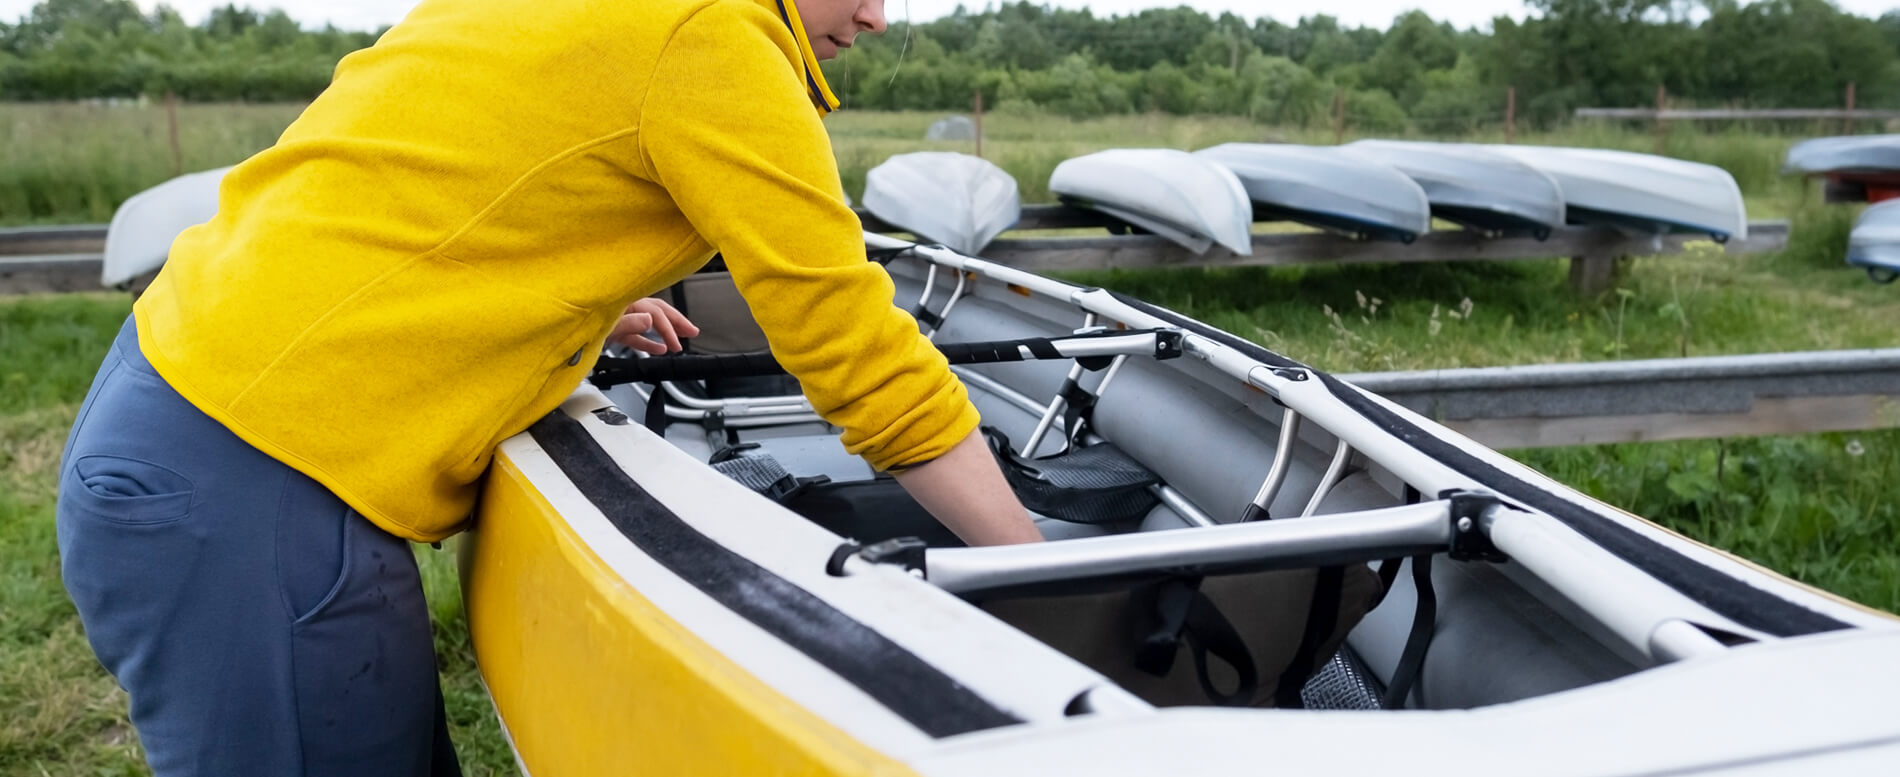 Kayaking Accessories, Paddles, Leashes, Helmets, Kayak Storage